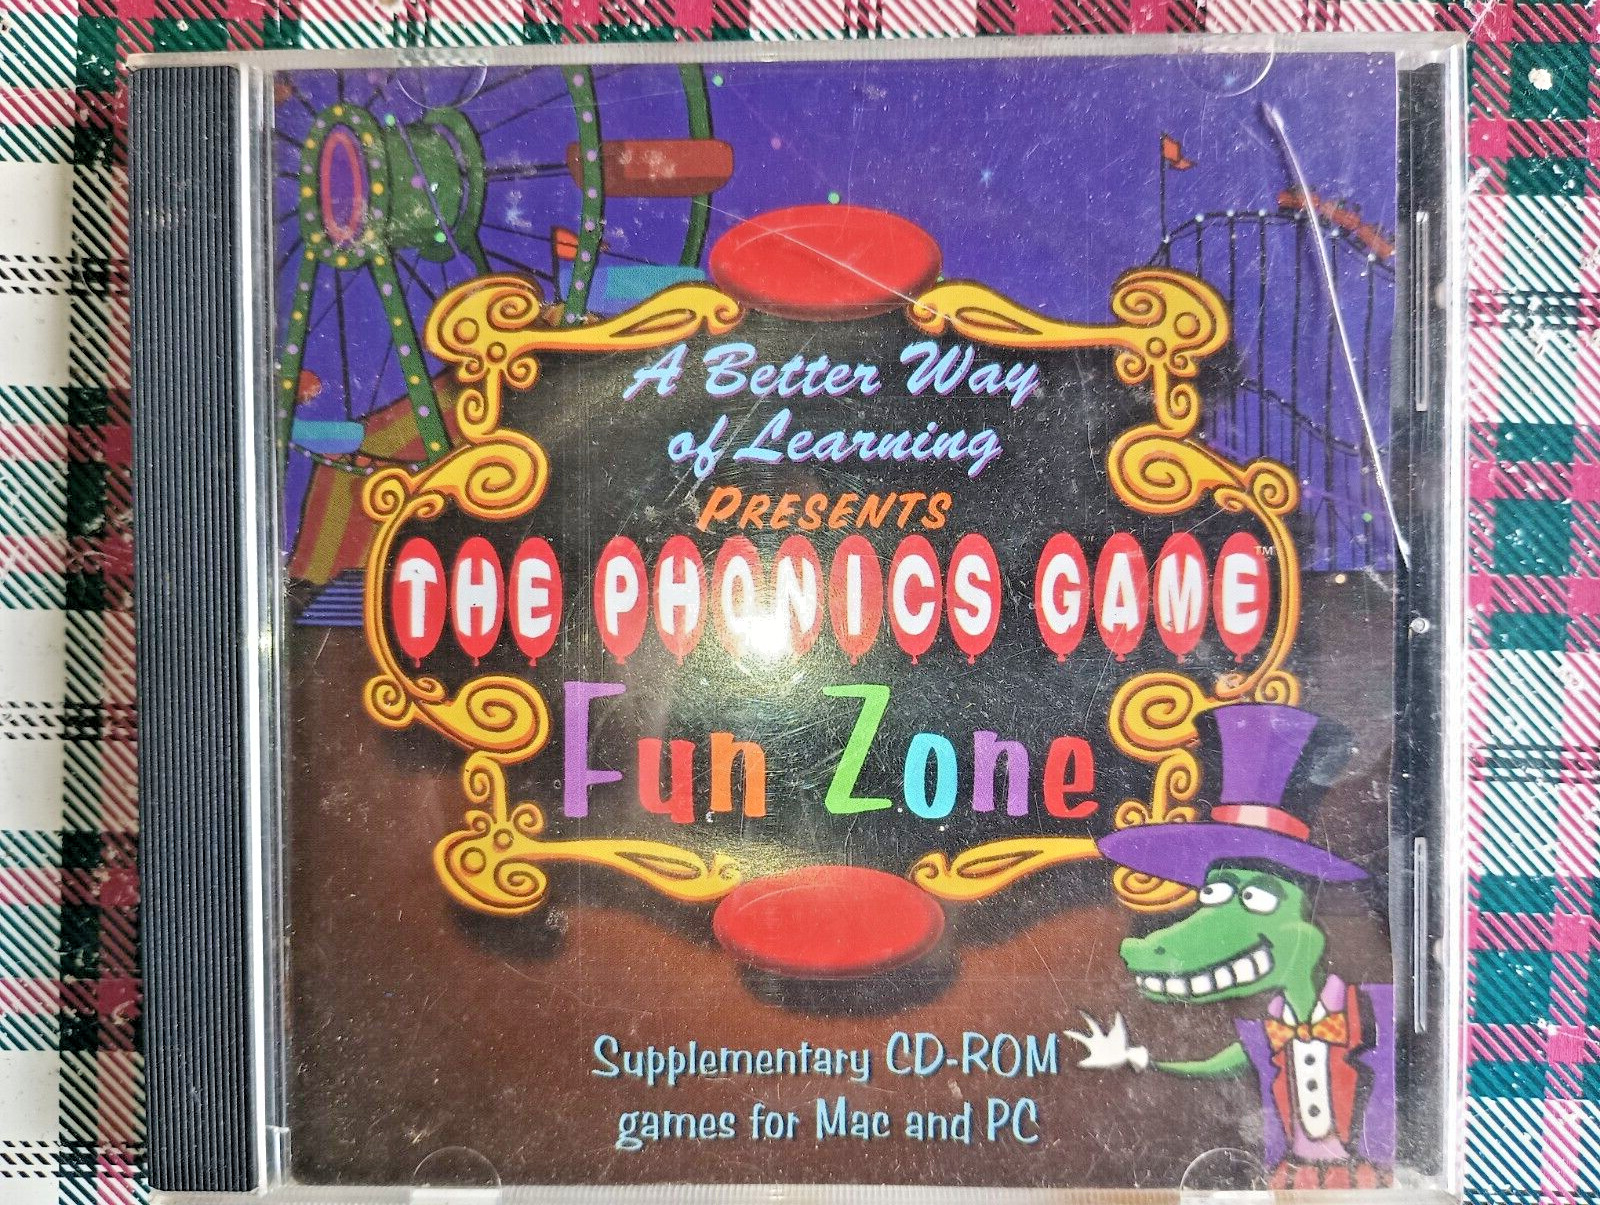 The Phonics Game Fun Zone PC/Mac CD-ROM Better Way Learn 1998 for Windows 95/98